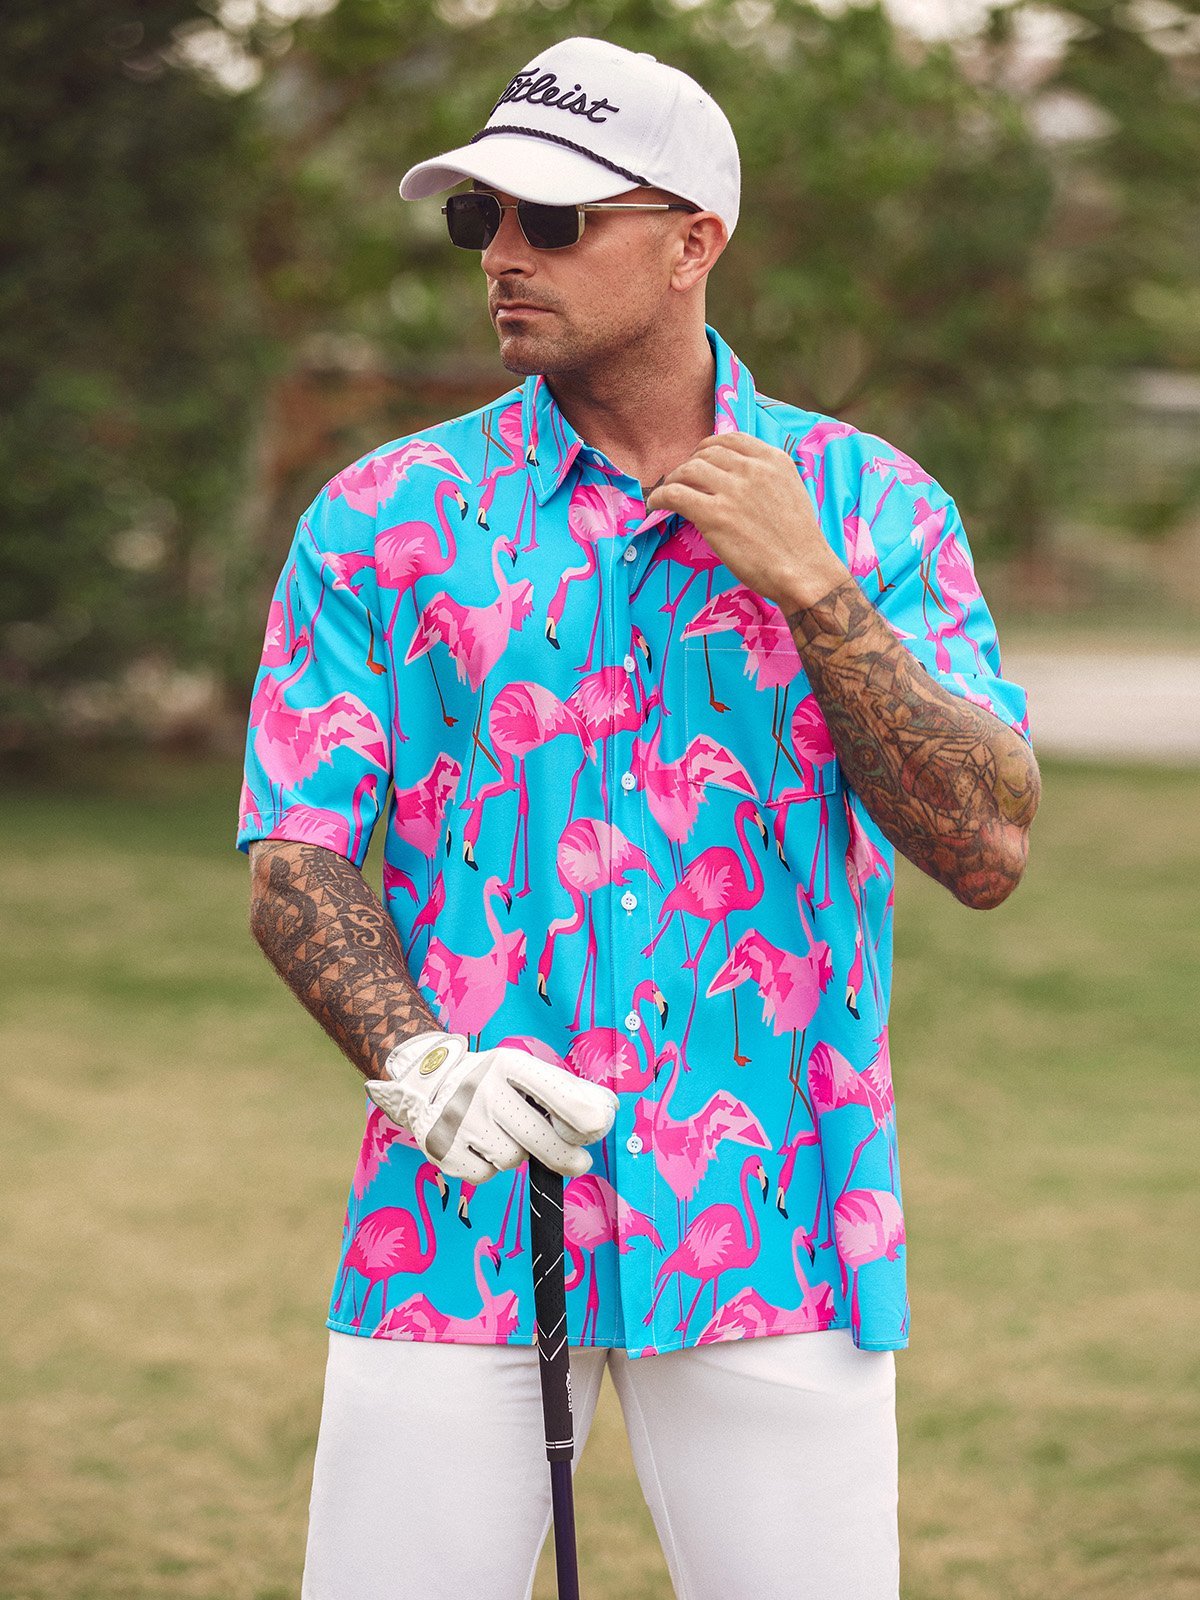 Hardaddy Tropical Animal Flamingo Chest Pocket Short Sleeve Hawaiian Shirt